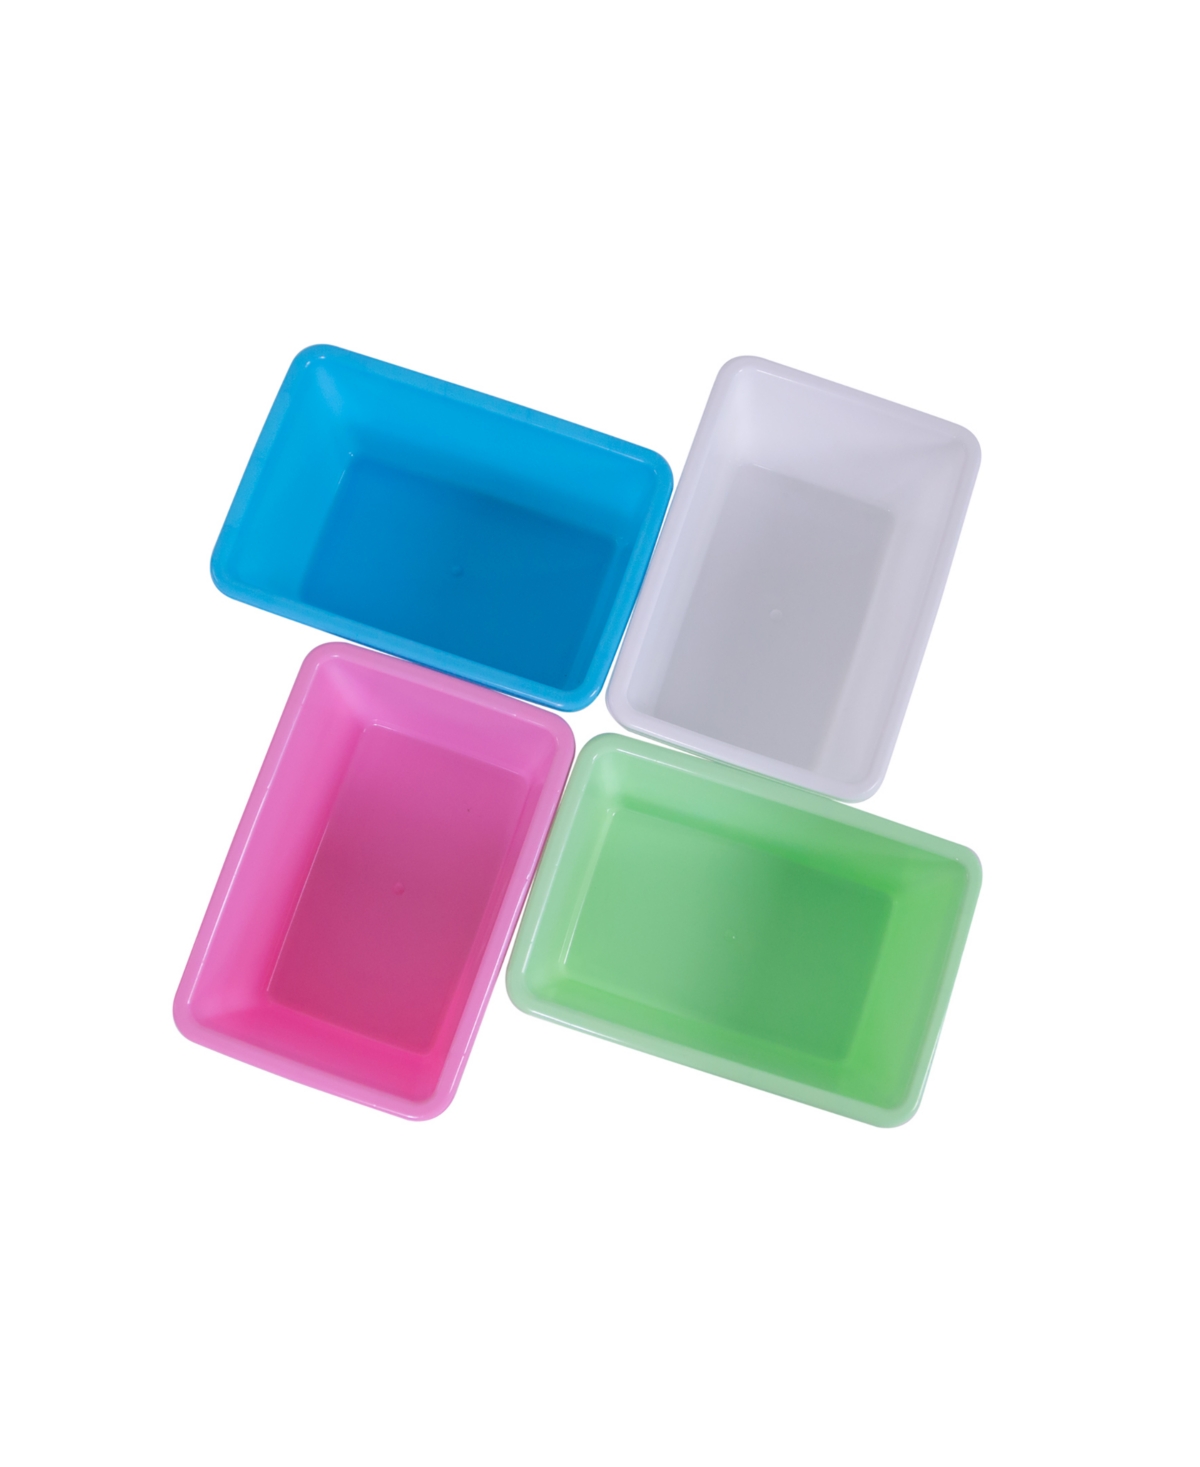 Toy Organizer Bins, Pack of 4 - Pink, Light Blue, Light Green, White